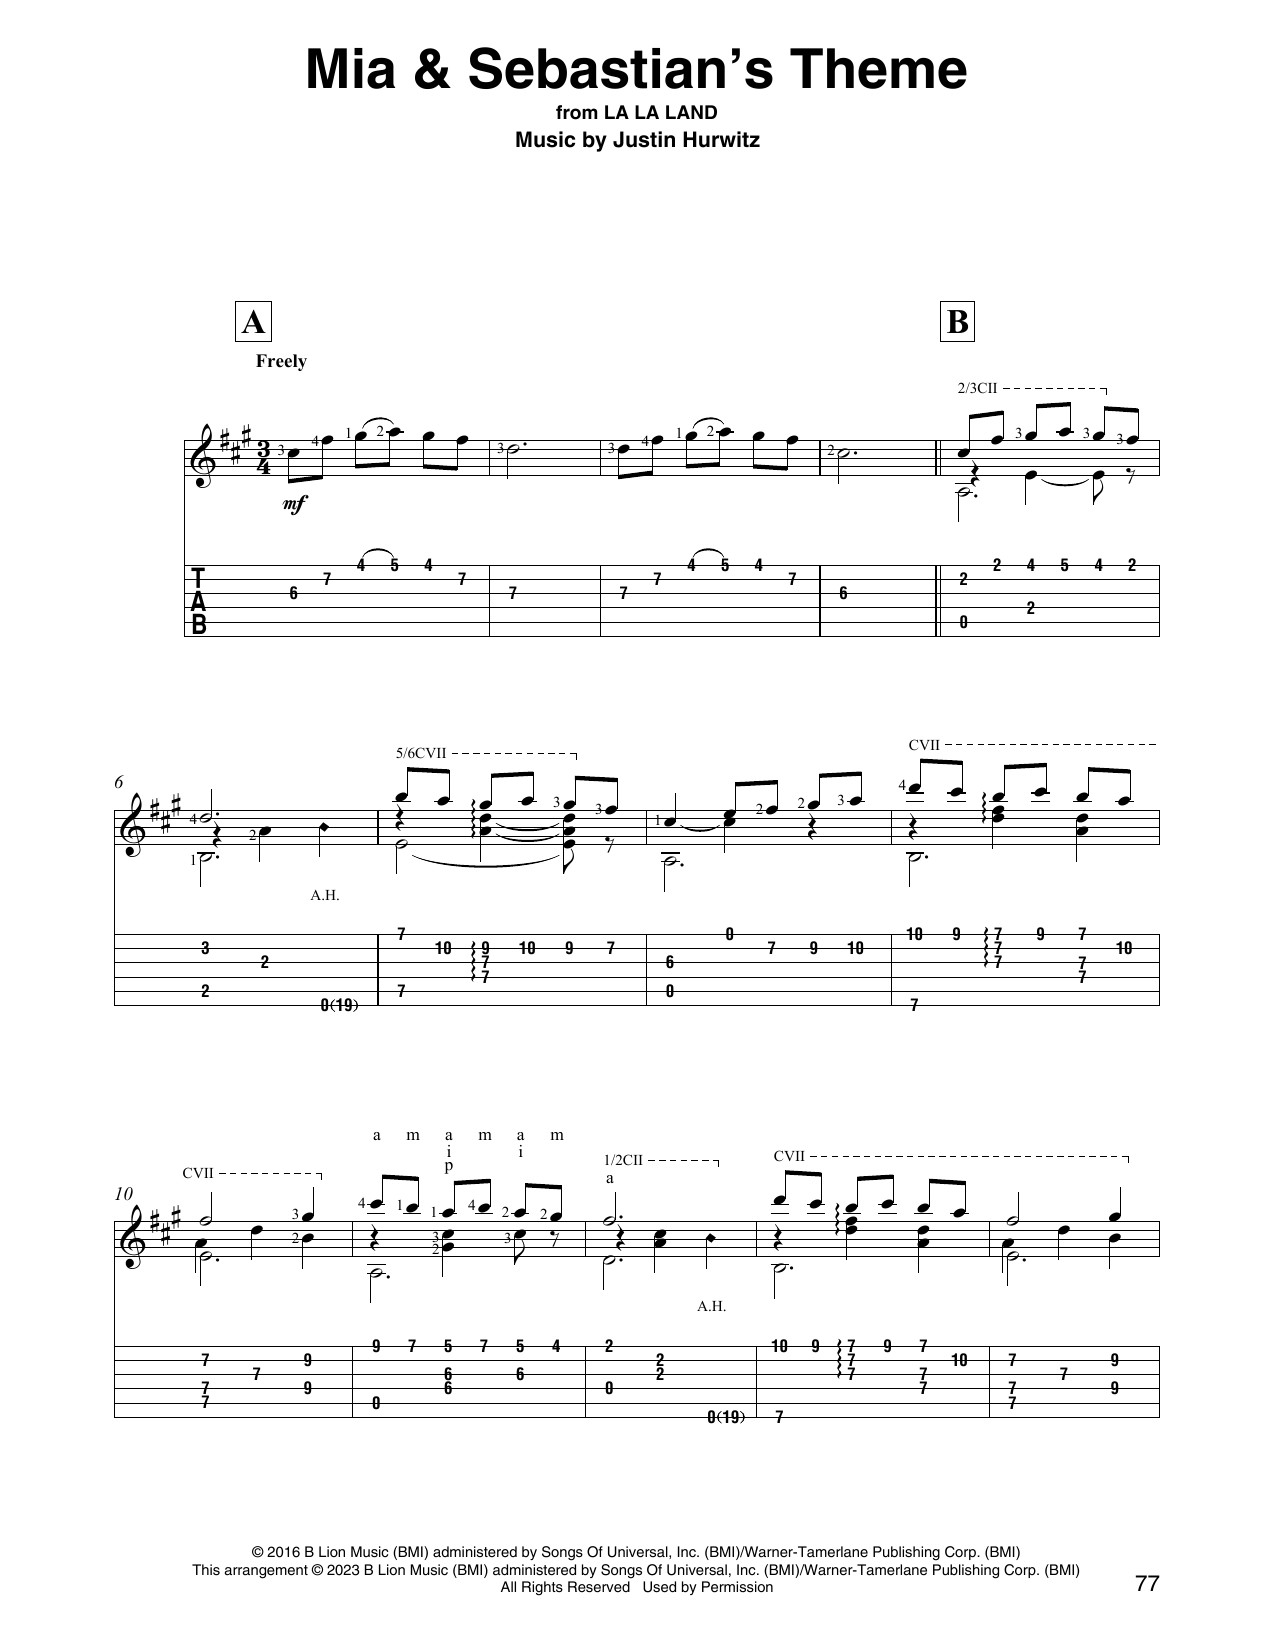 Justin Hurwitz Mia & Sebastian's Theme (from La La Land) Sheet Music Notes & Chords for Solo Guitar - Download or Print PDF